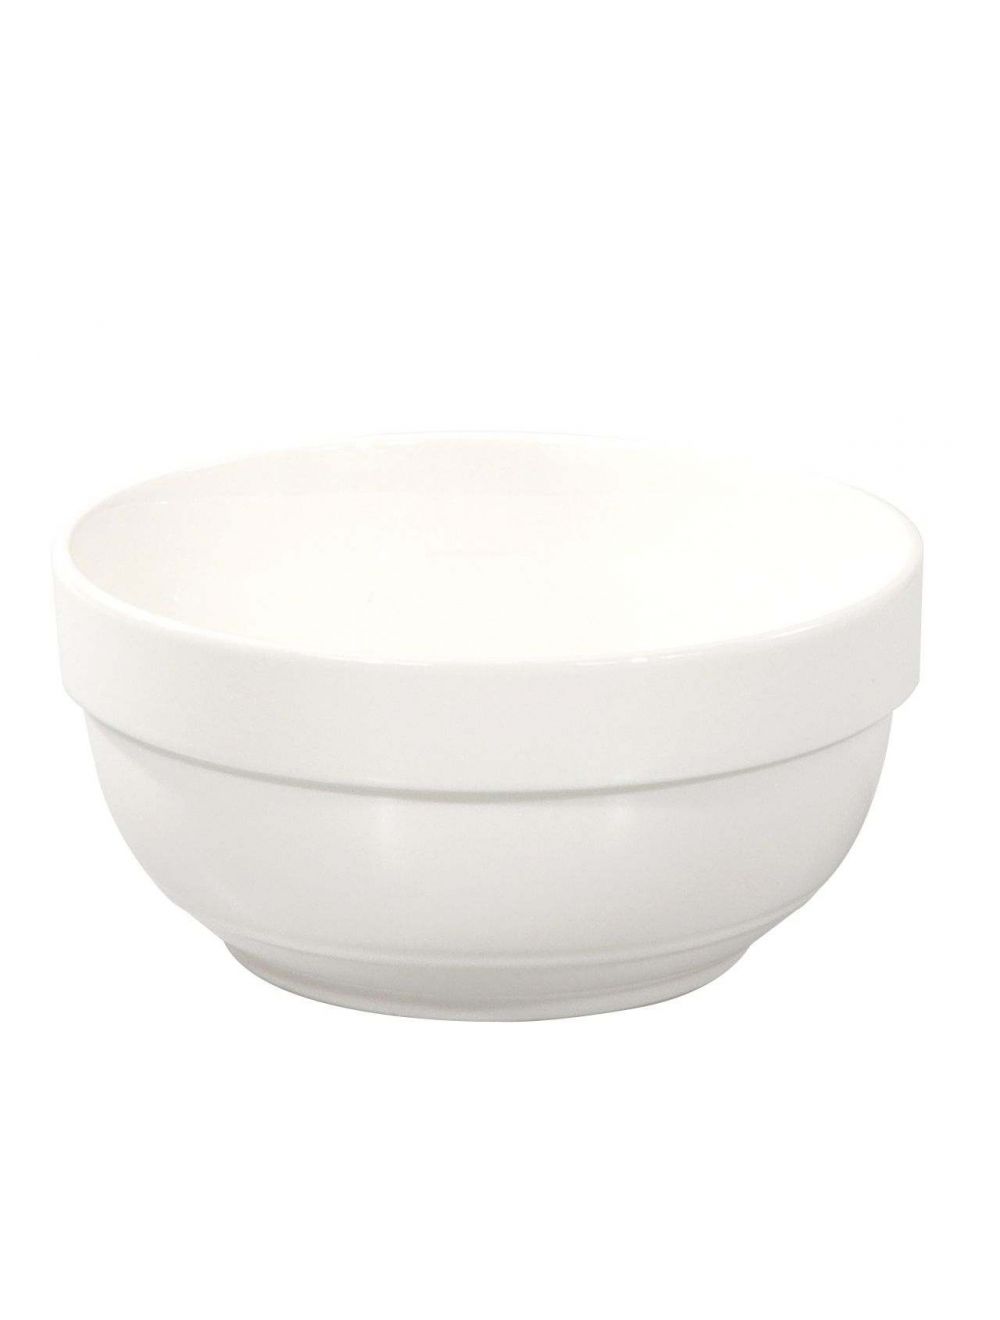 Royalford RF8768 Porcelainware 7 Inch Bowl Edage Design